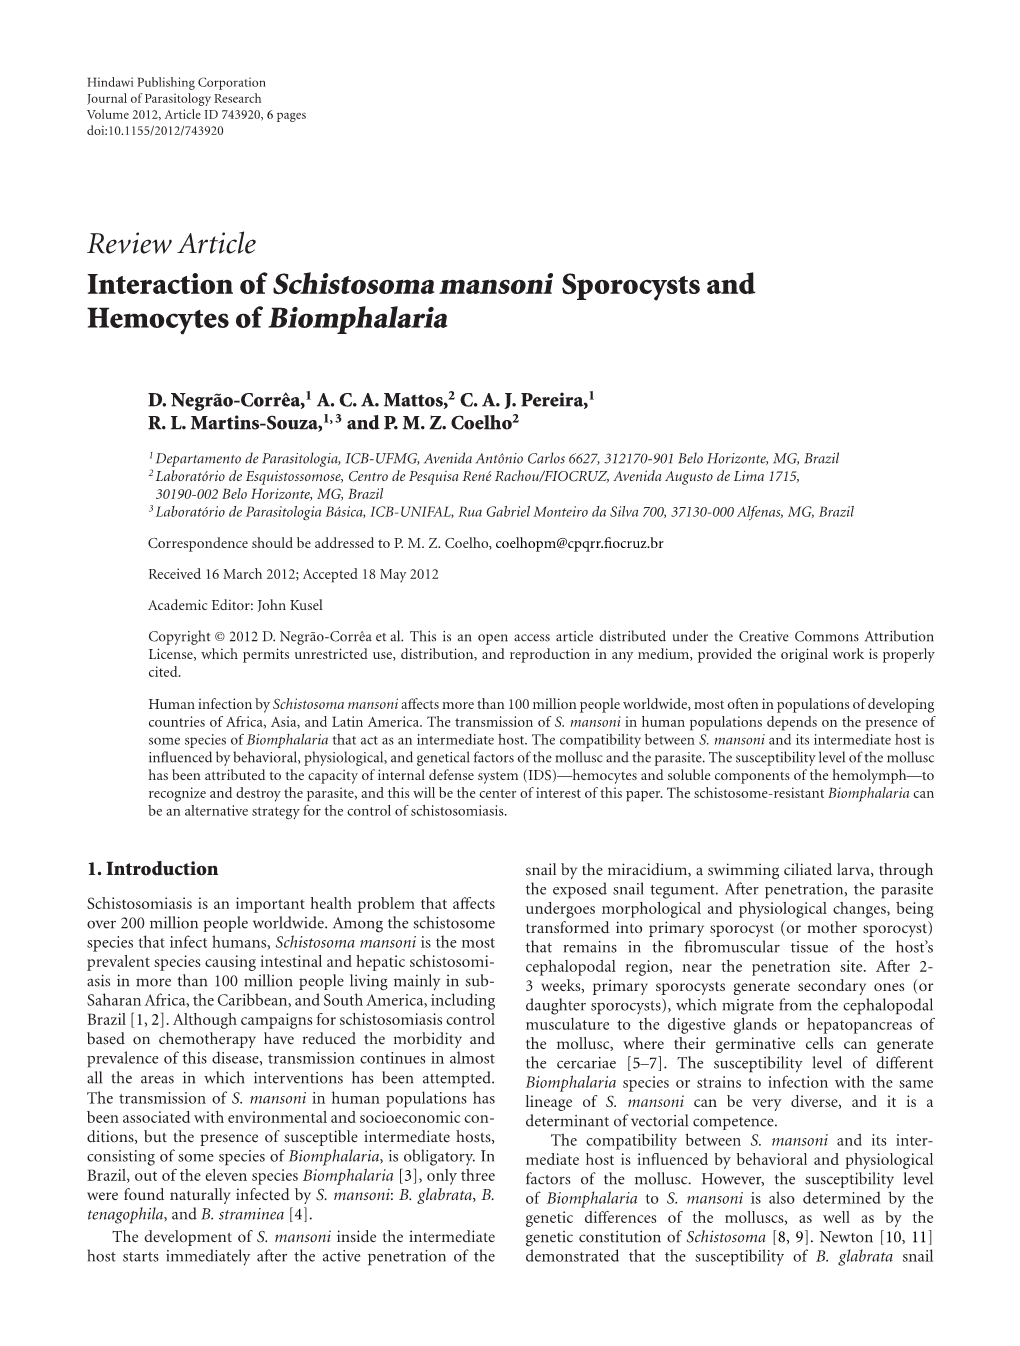 Interaction of Schistosoma Mansoni Sporocysts and Hemocytes of Biomphalaria